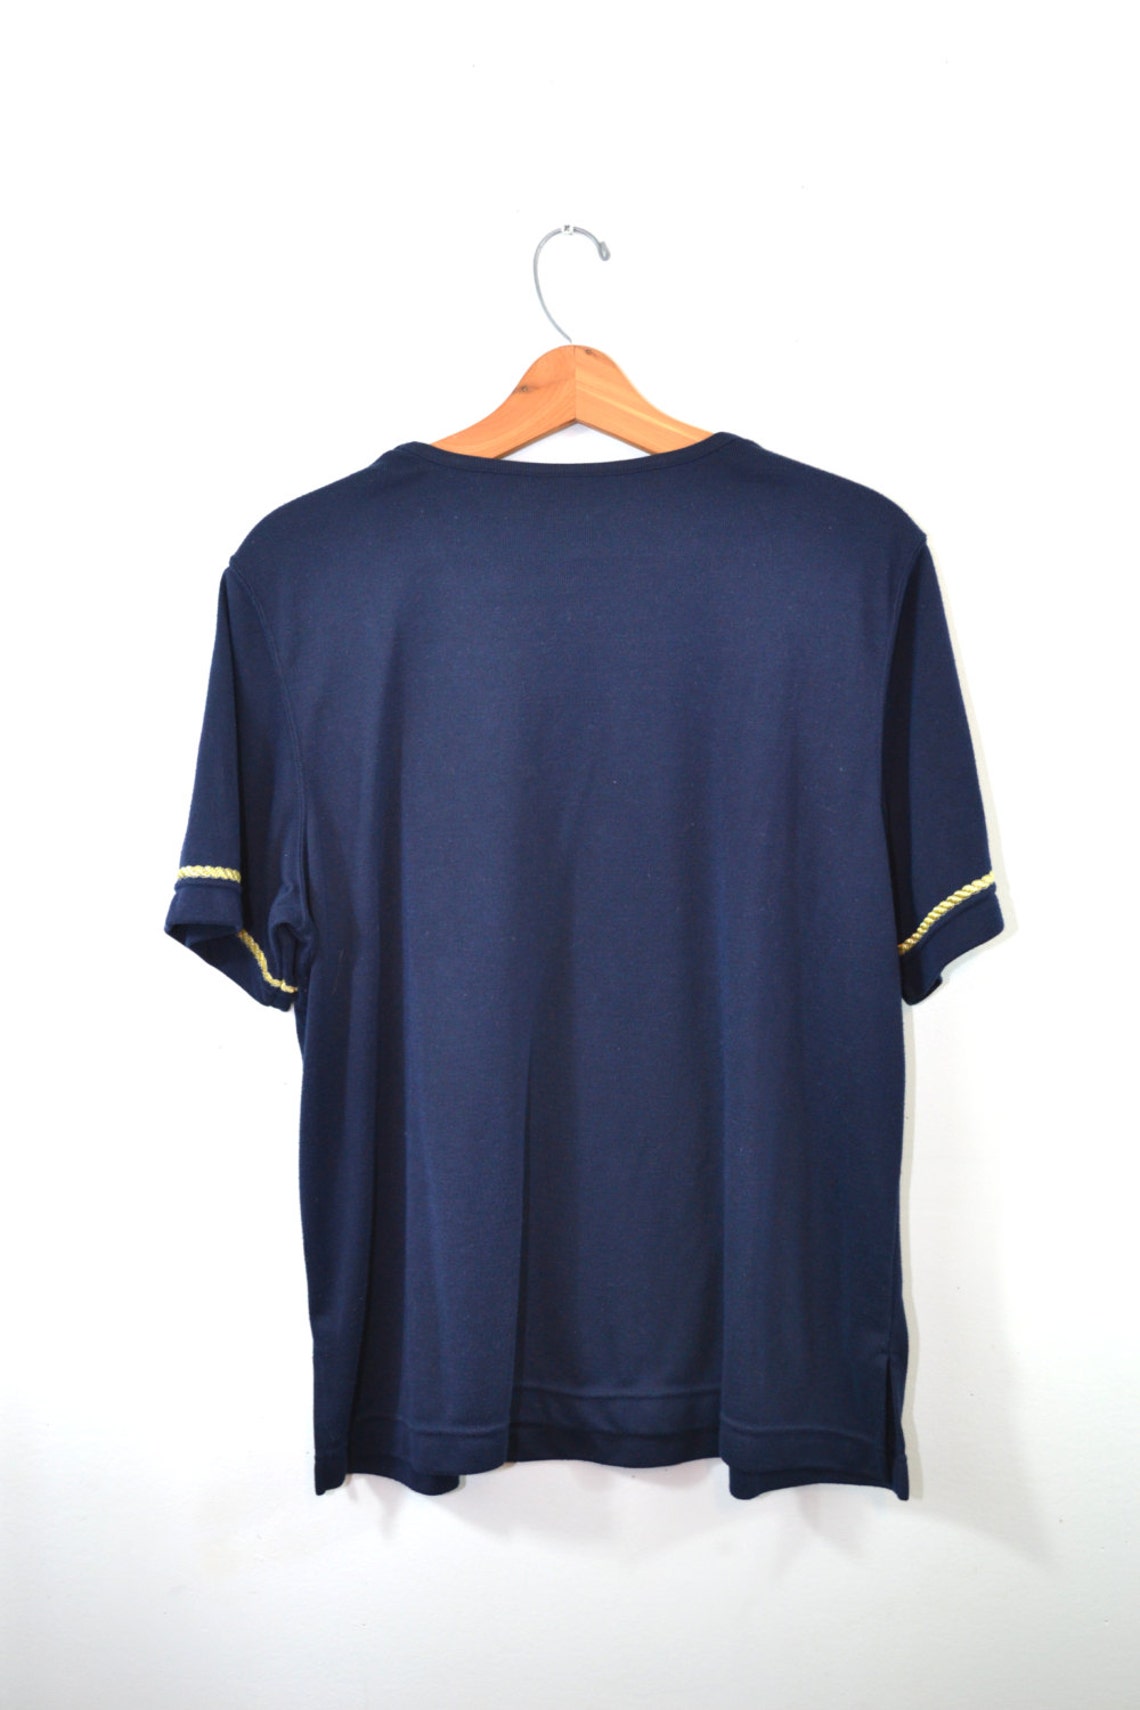 Vintage Navy Blue Shirt Nautical Shirt Blue Shirt with Gold | Etsy